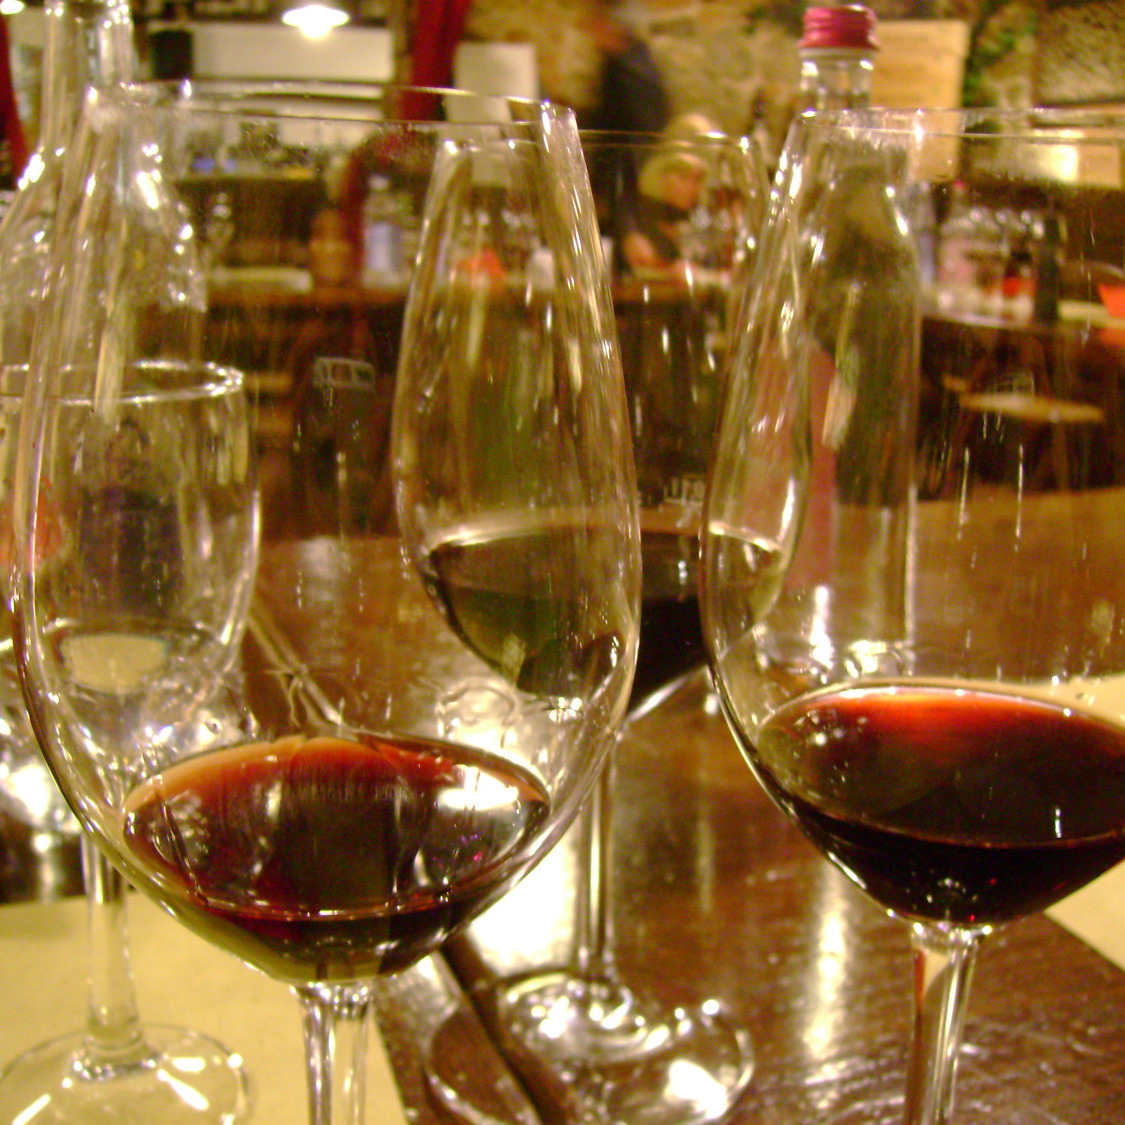 From wine to wine - Wine Tasting